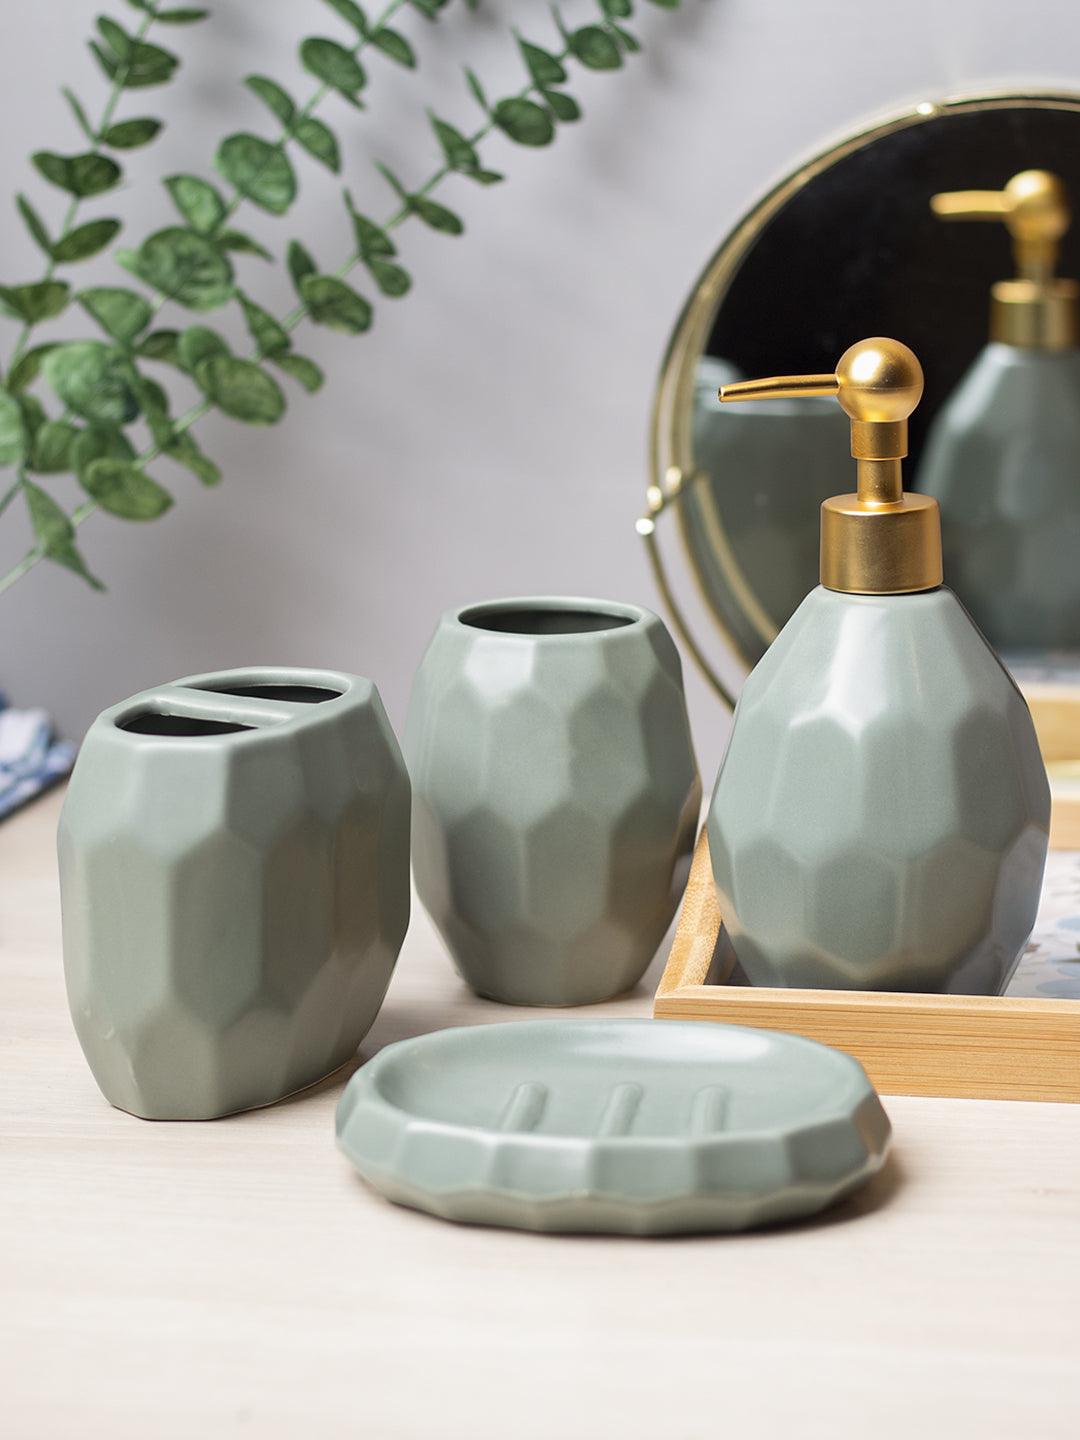 Green Ceramic Bathroom Set Of 4 - Stone Finish, Bath Accessories - 1